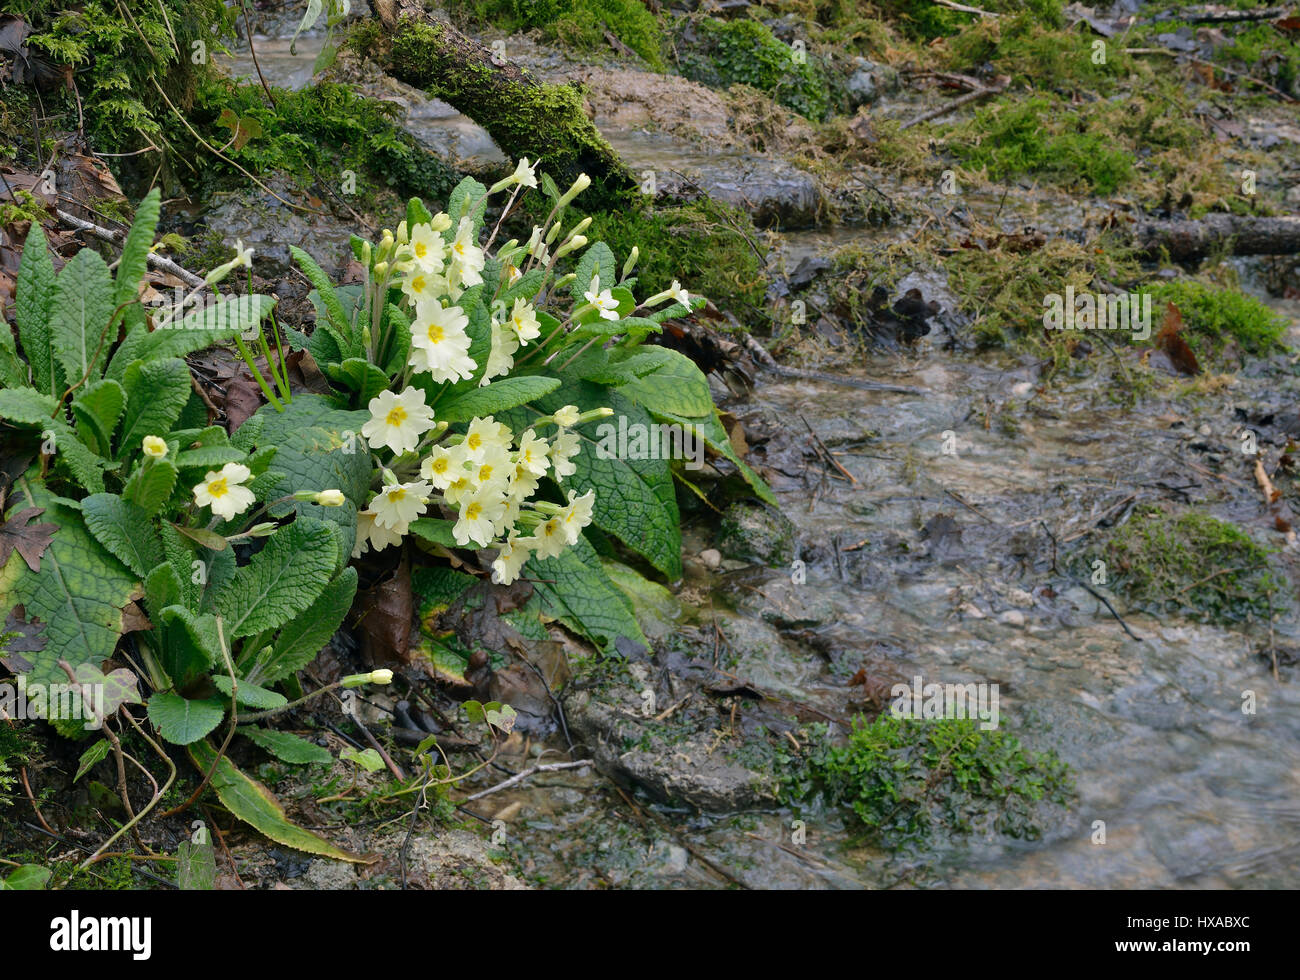 Primrose - Primula vulgaris growing by Cotswold Woodland Stream Stock Photo